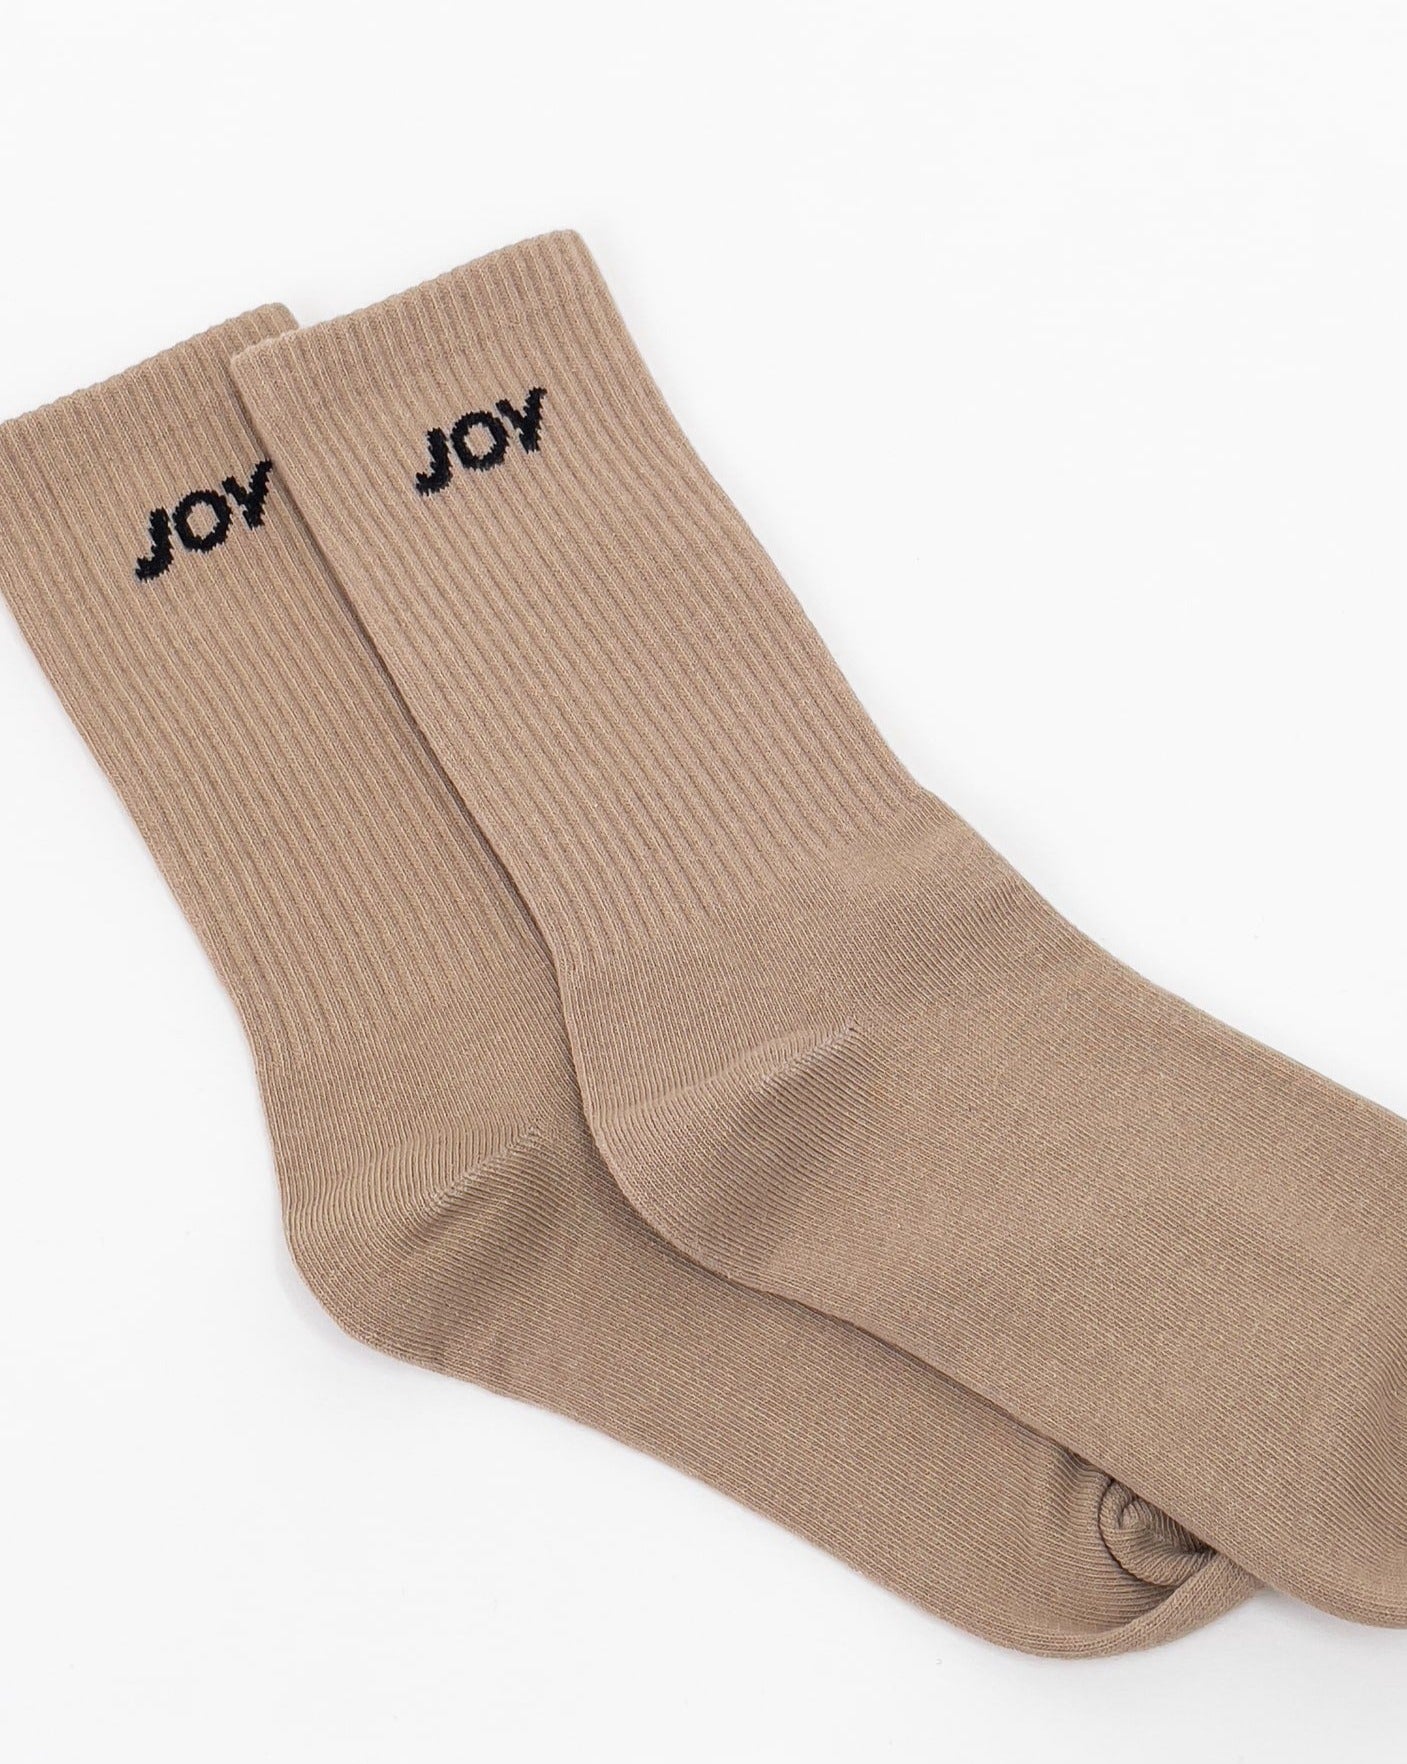 Chaussette JOY - Kaki - Joy Studio - Premium Sportswear